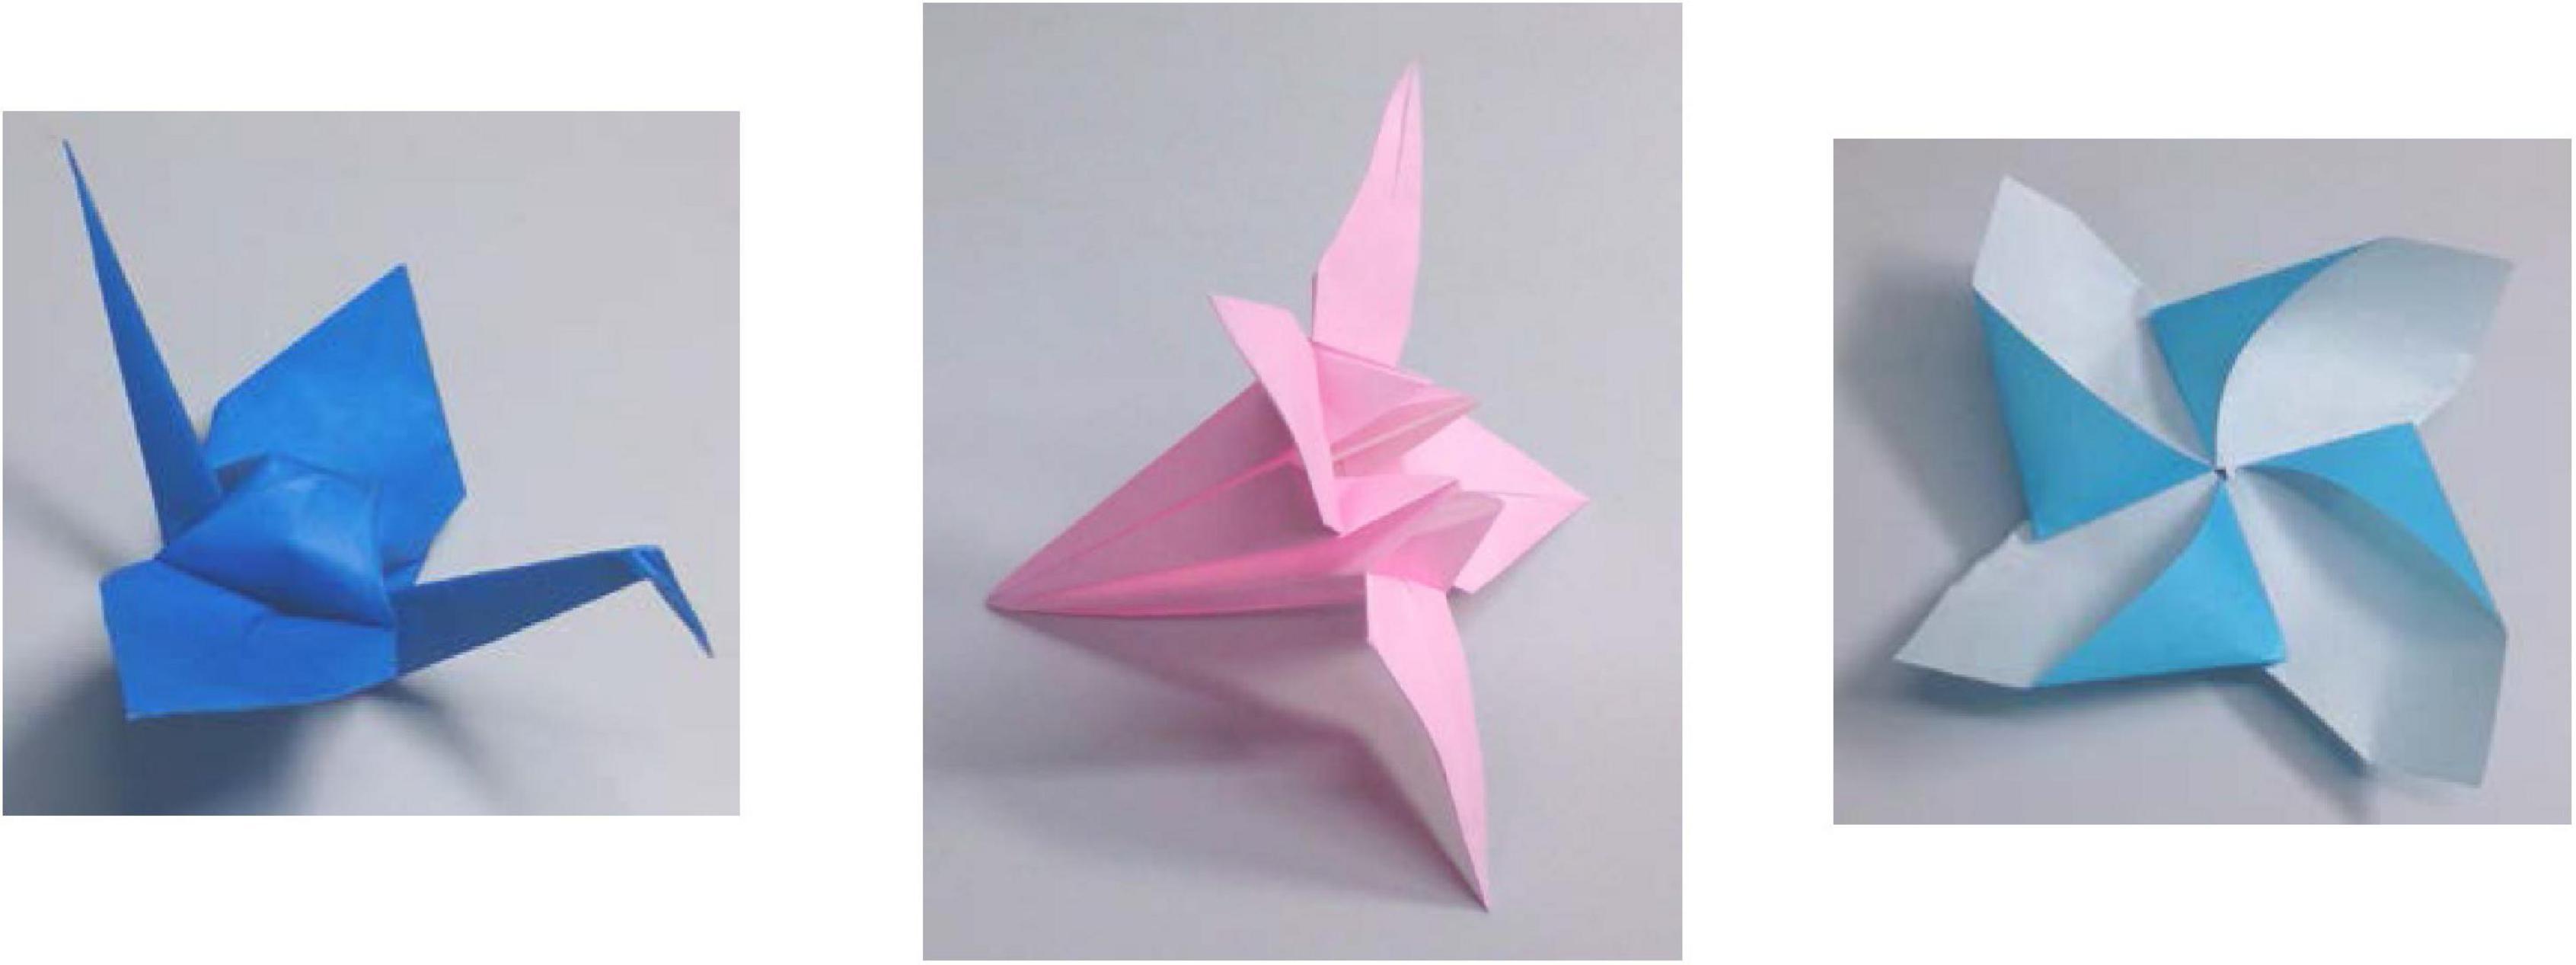 Origami & paper engineering books